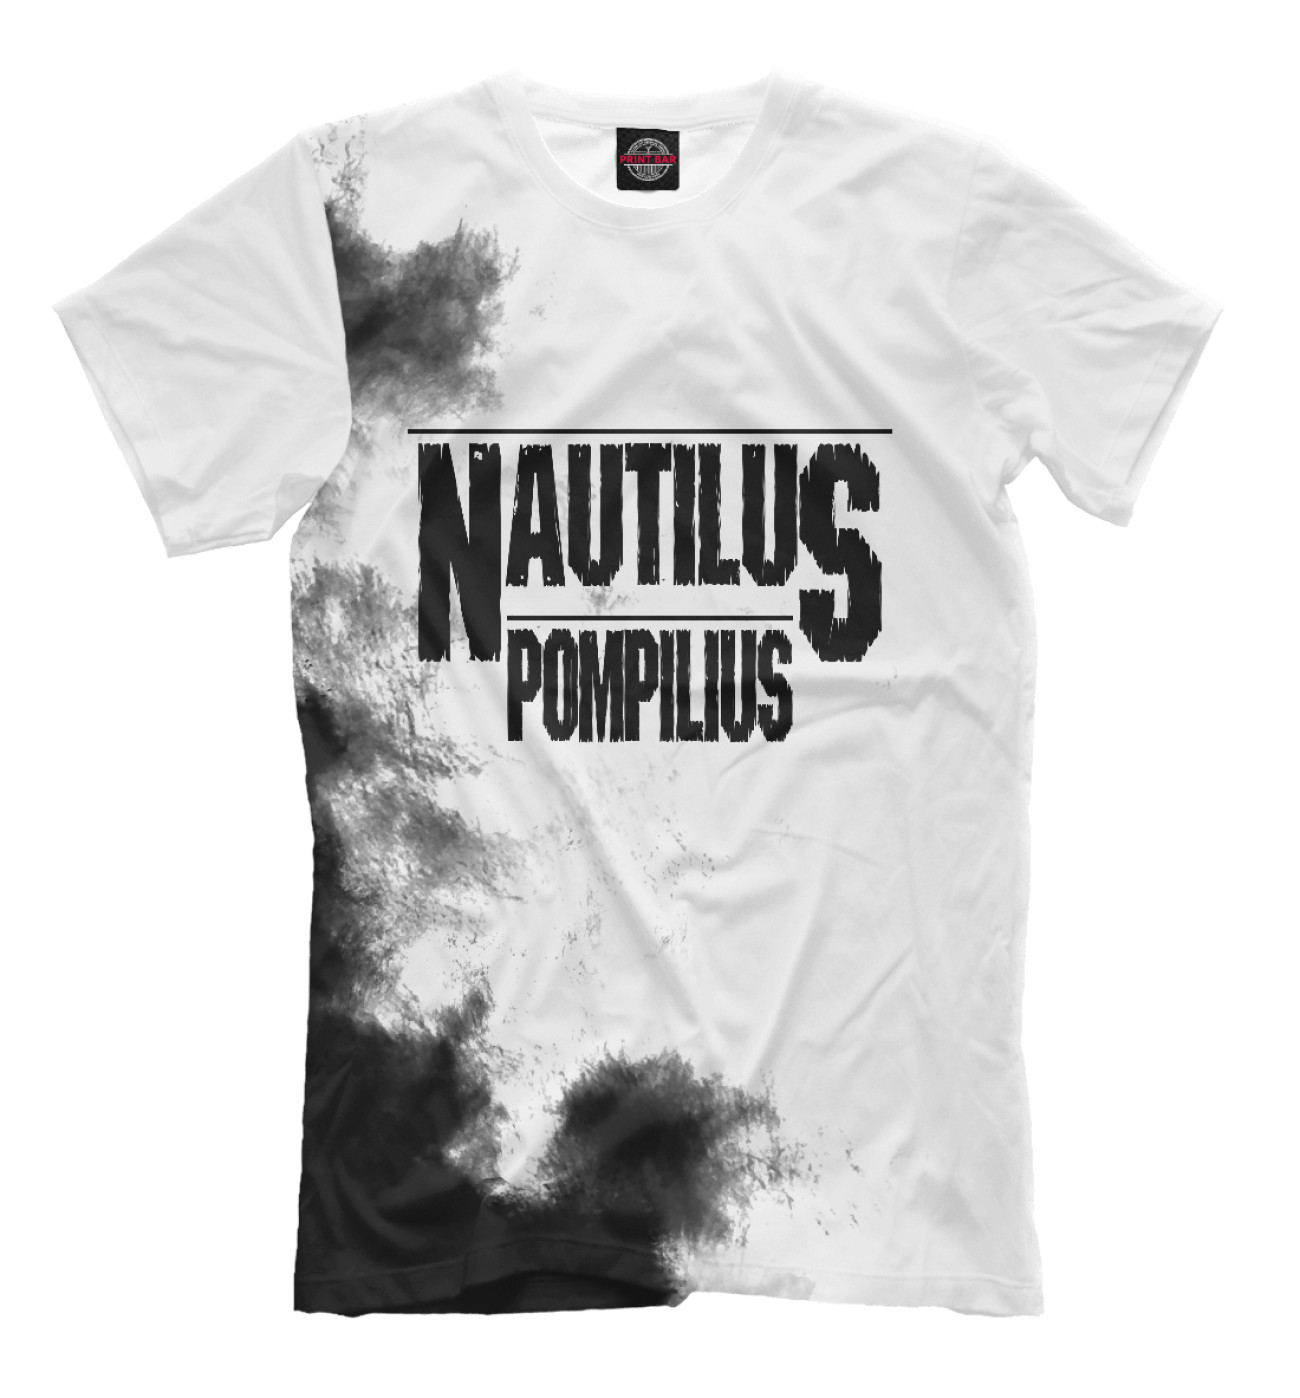 Мужская Футболка Nautilus Pompilius, артикул: NPM-613193-fut-2